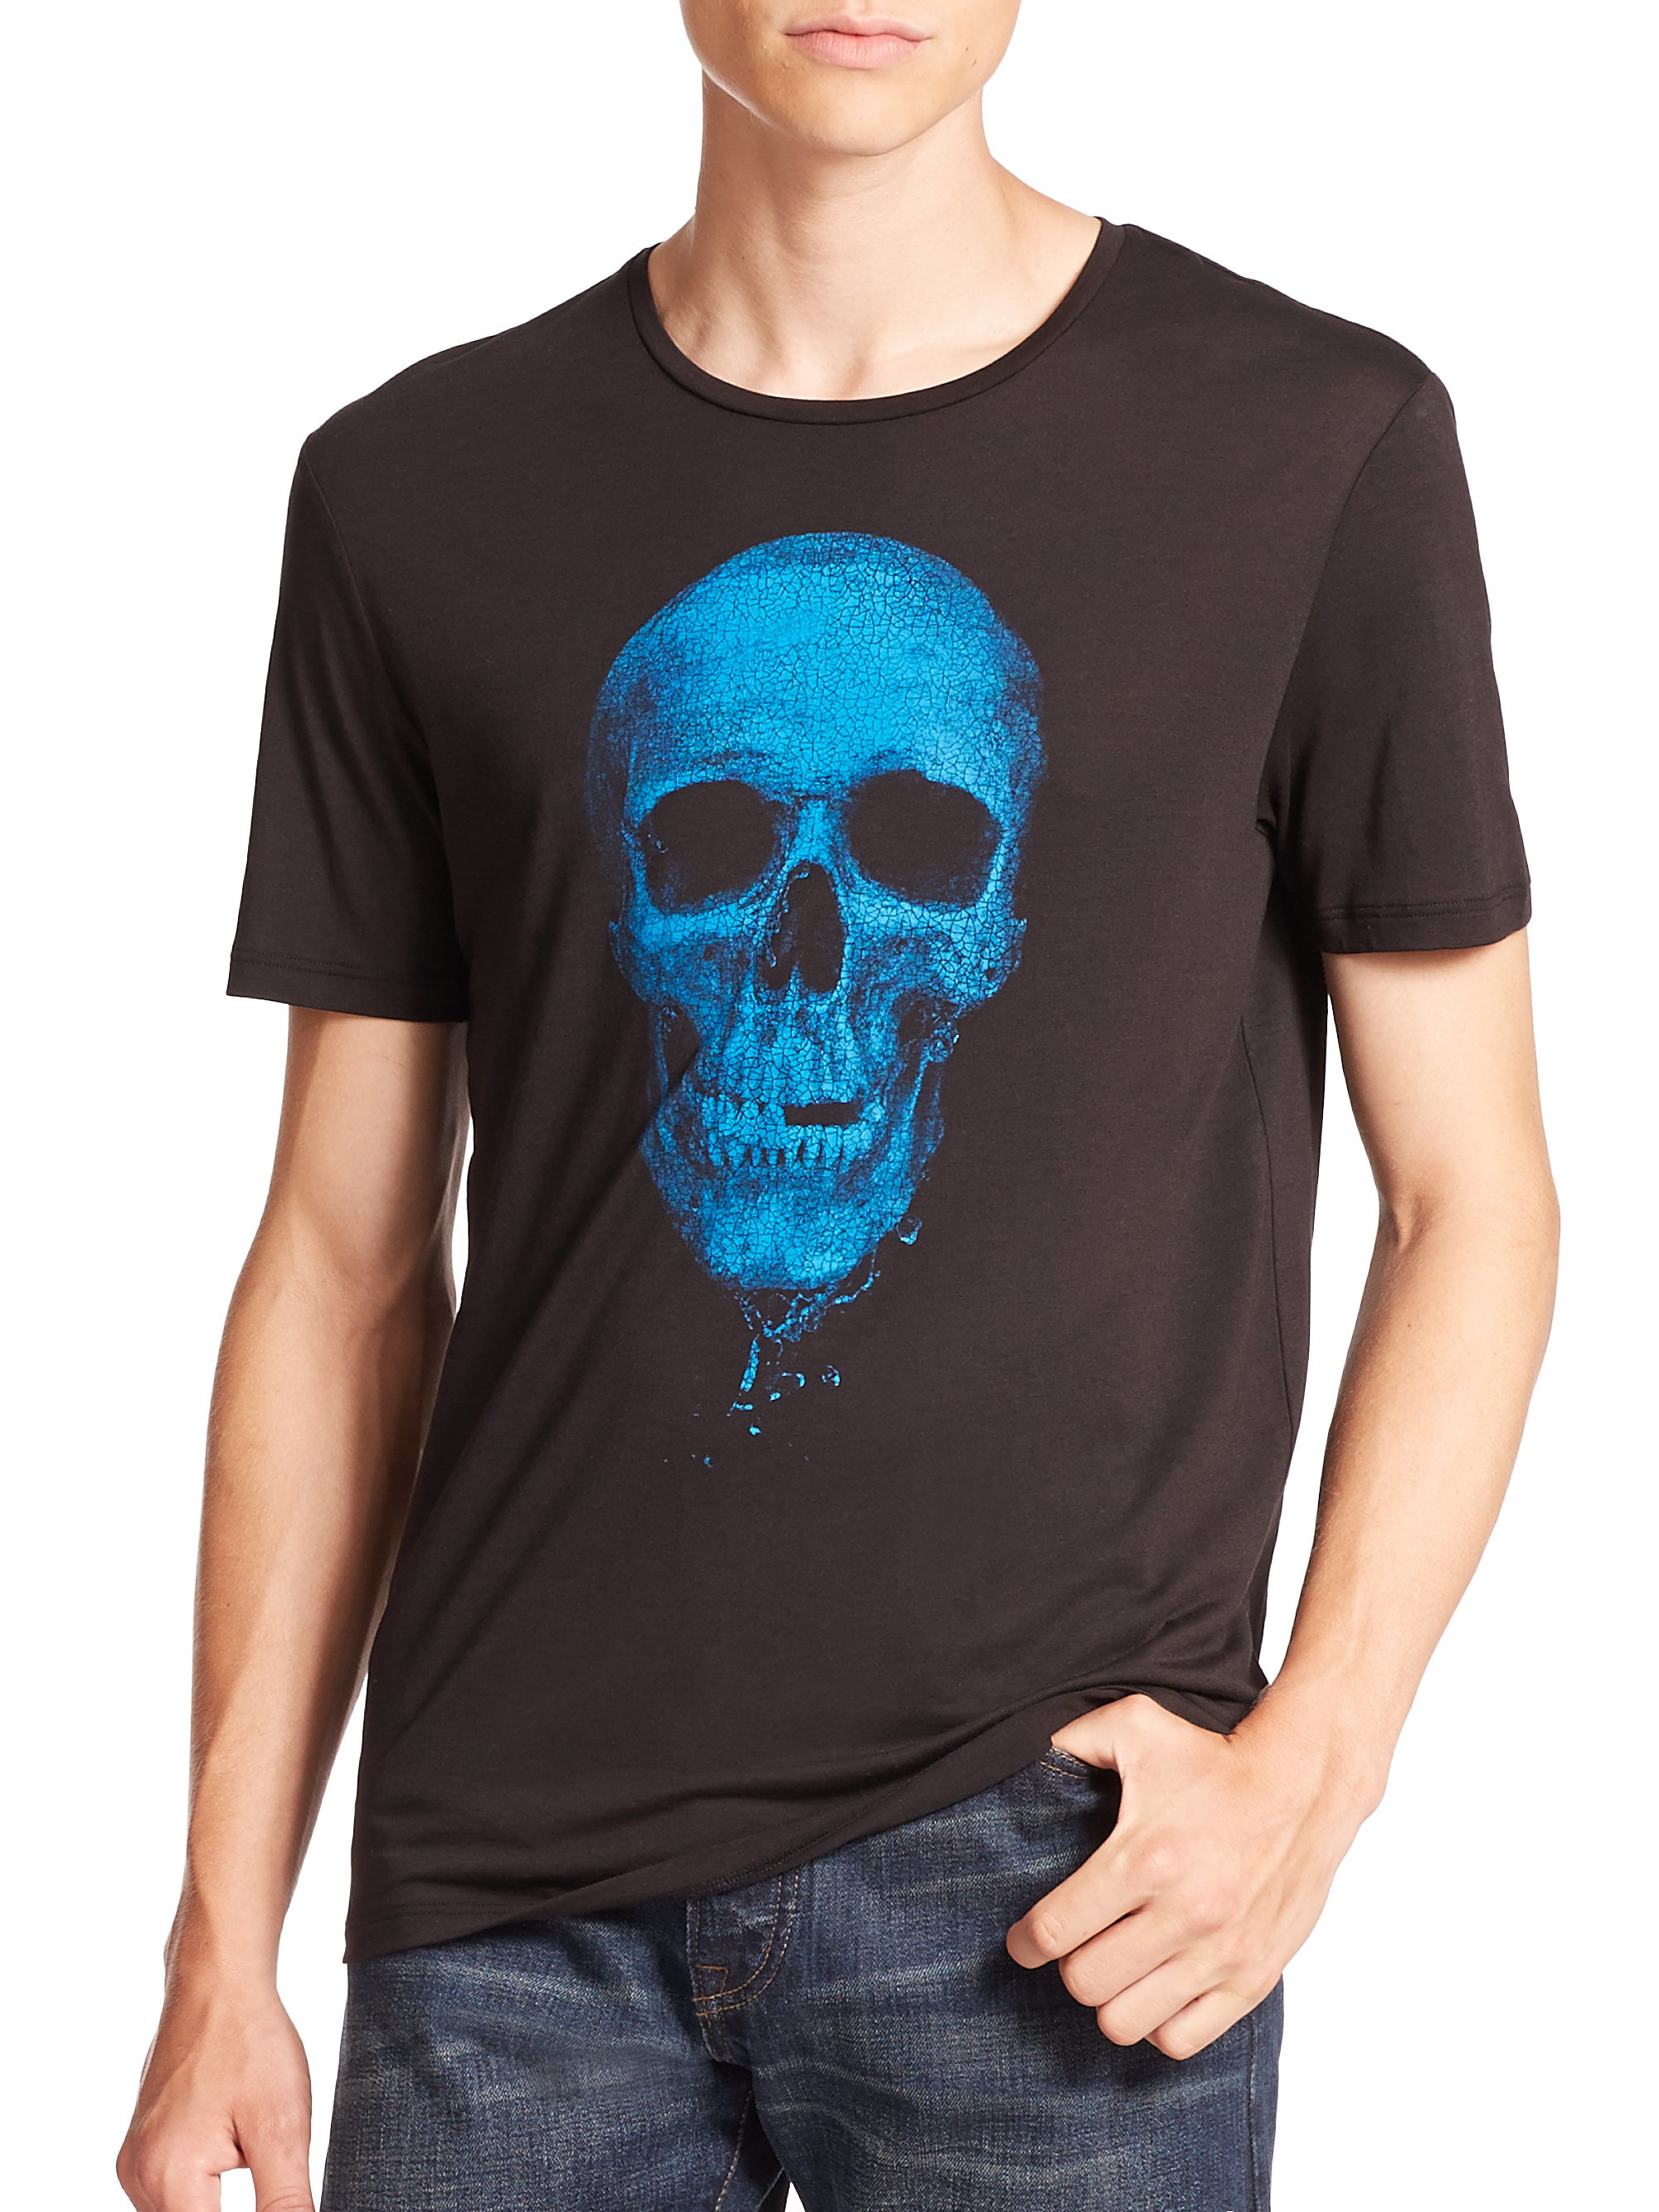 Lyst - The Kooples Skull Graphic Tee in Black for Men